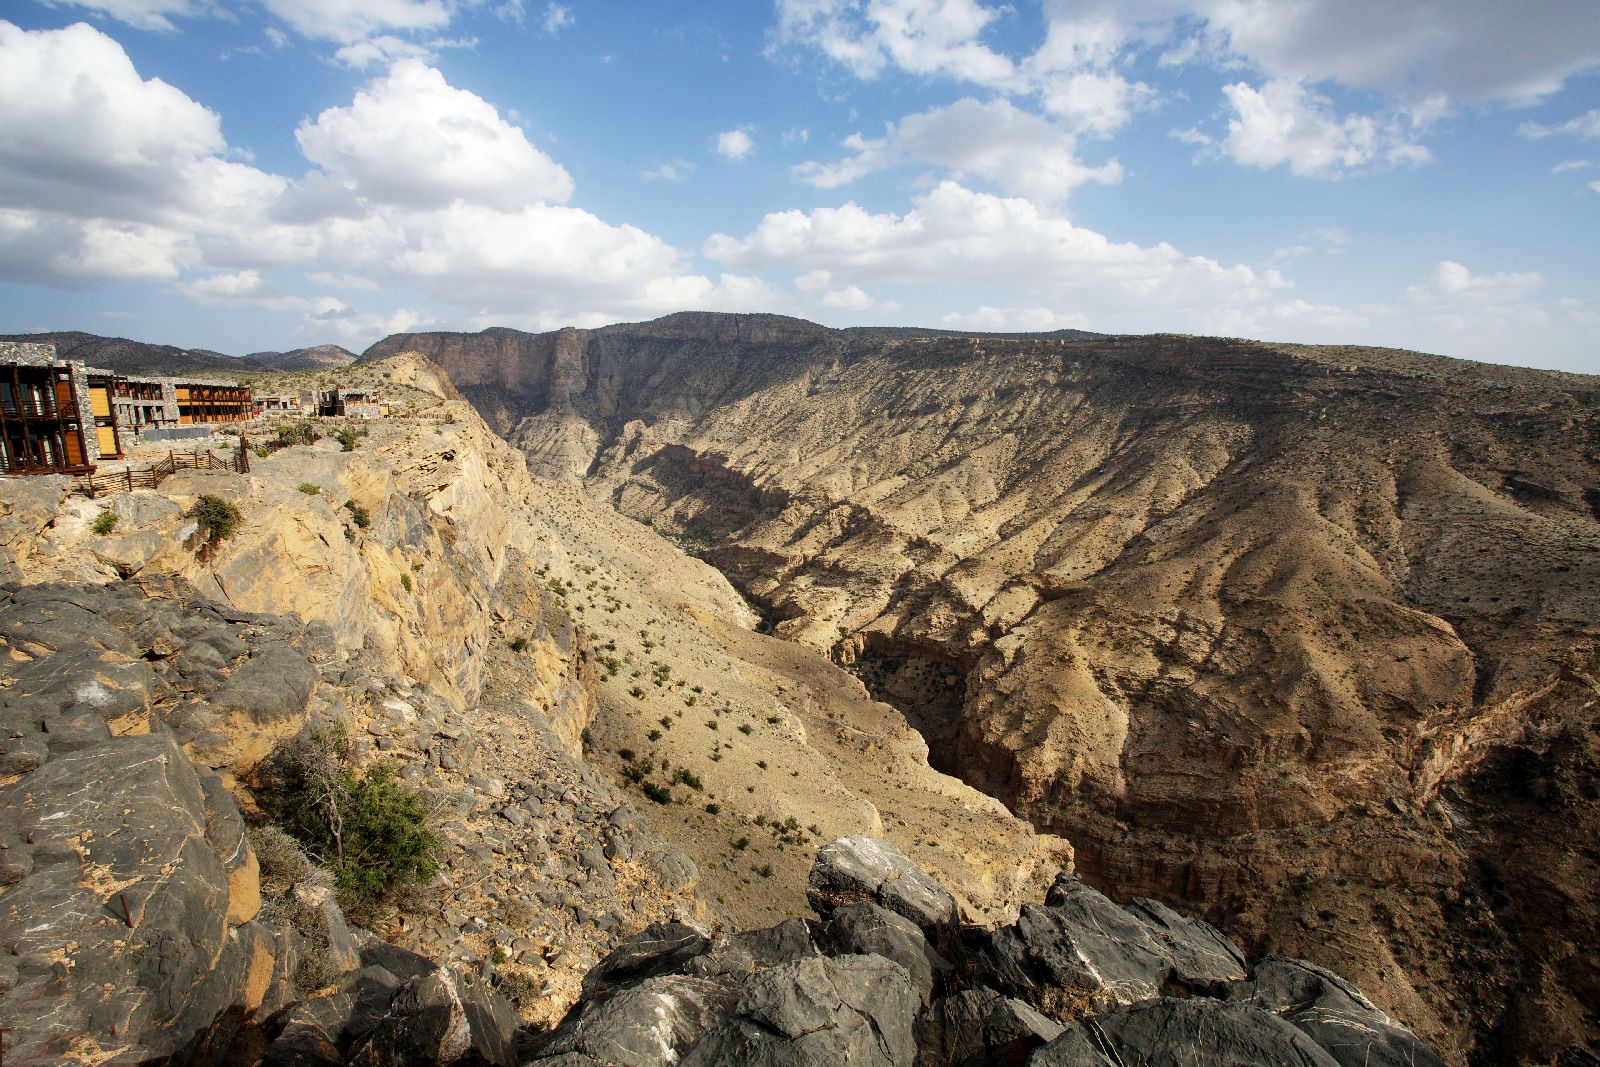 Dramatic cliffside setting of the Alila Jabal Akhdar in Oman